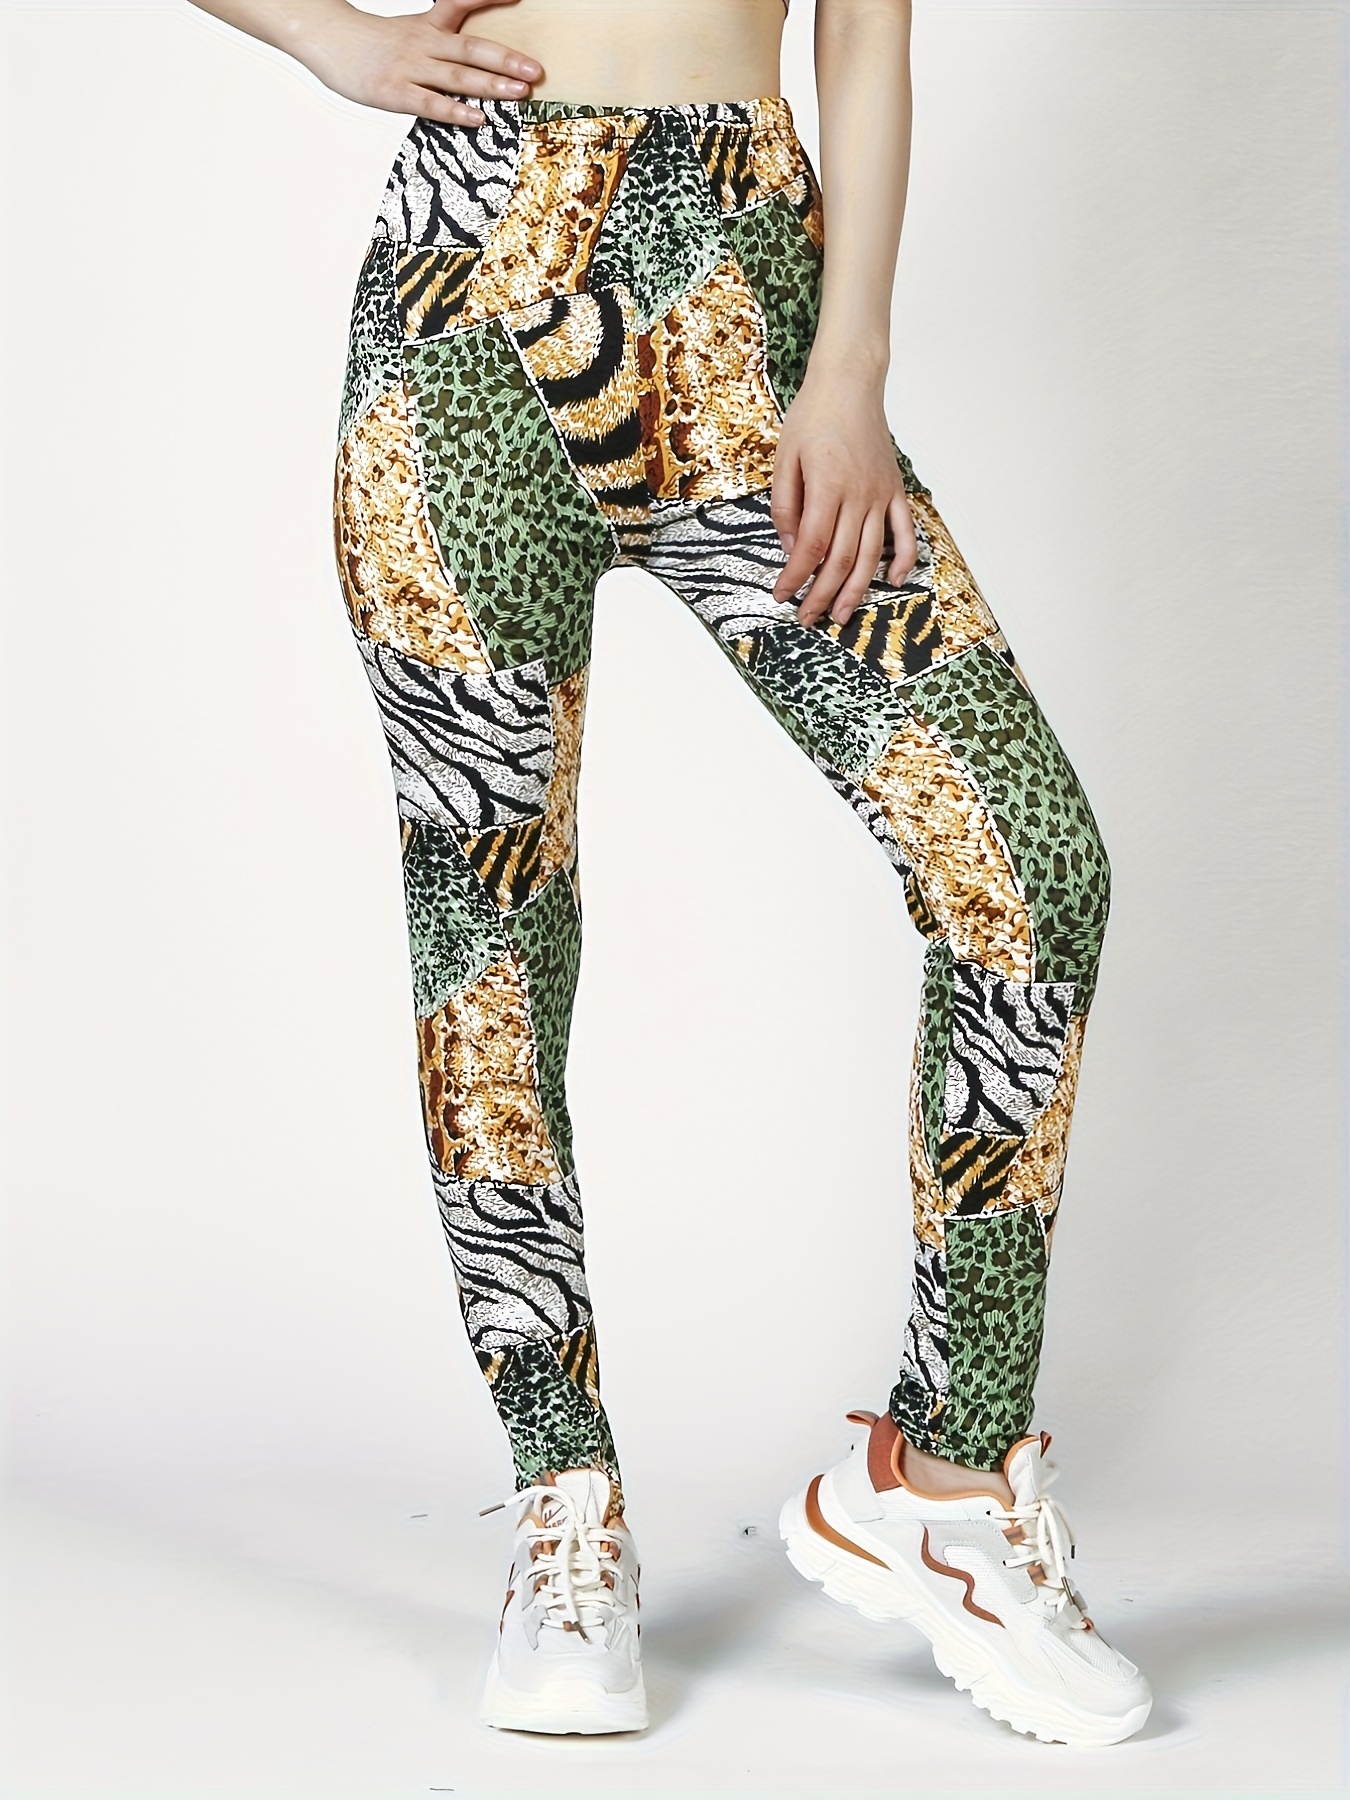 Neon Leopard Print 80s Leggings Fancy Dress Costume Accessory Smiffys 26673  for sale online